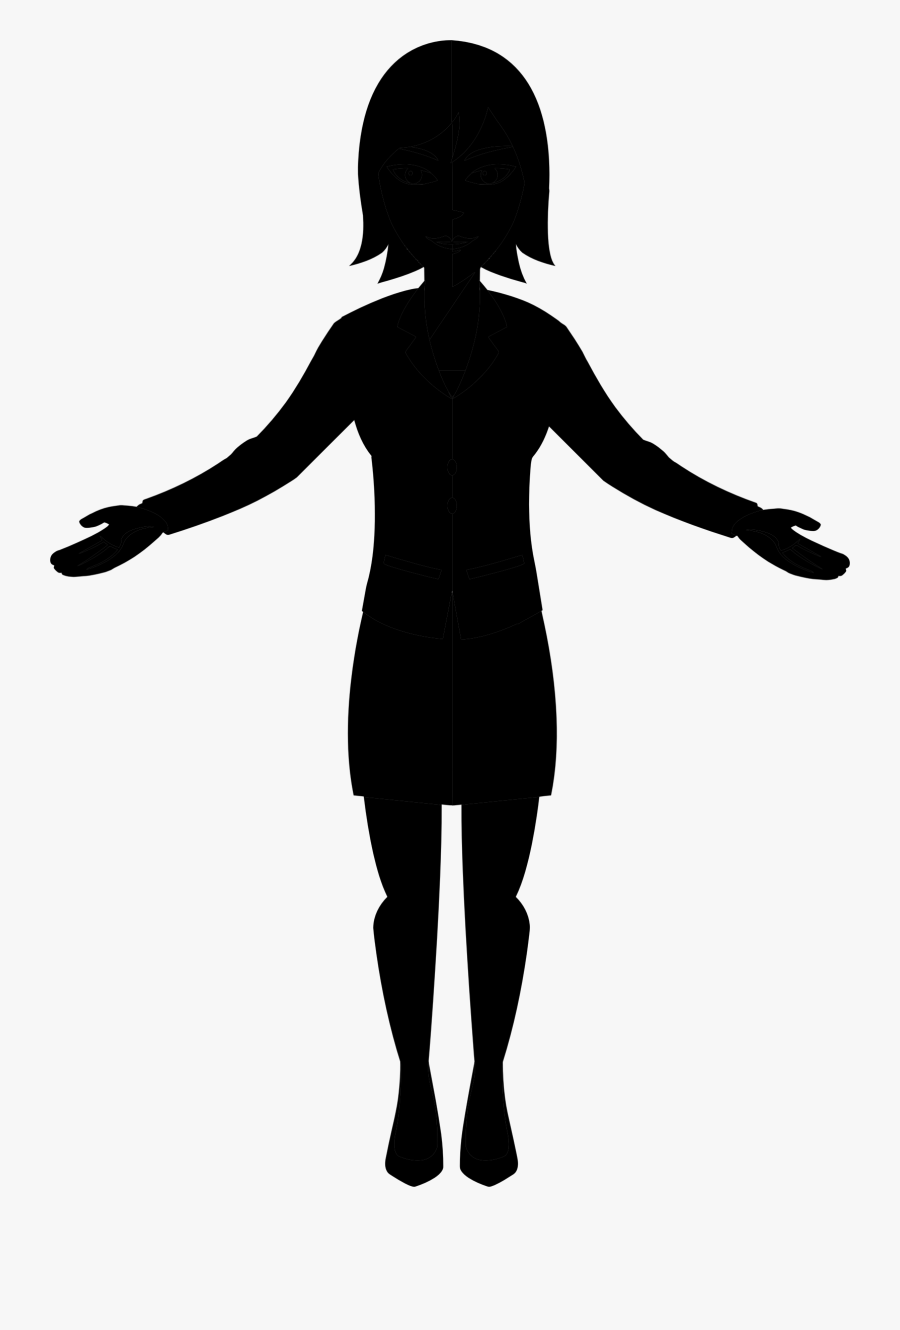 Clip Art Silhouette Vector Graphics Woman Image - Female Silhouette Clipart, Transparent Clipart